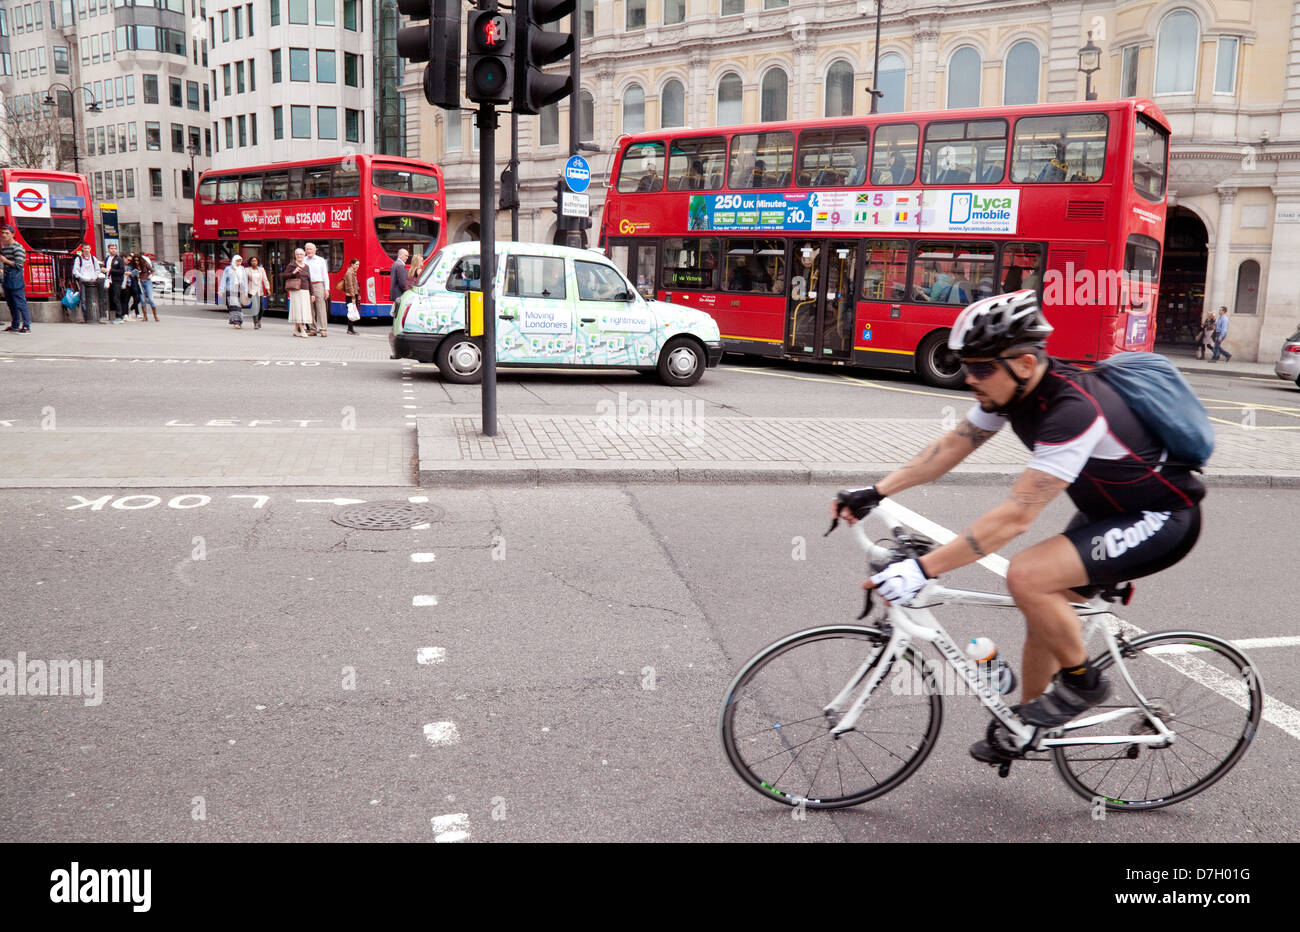 London cycling street scene - A cyclist riding a bike in Trafalgar Square, Central London city centre, England UK Stock Photo